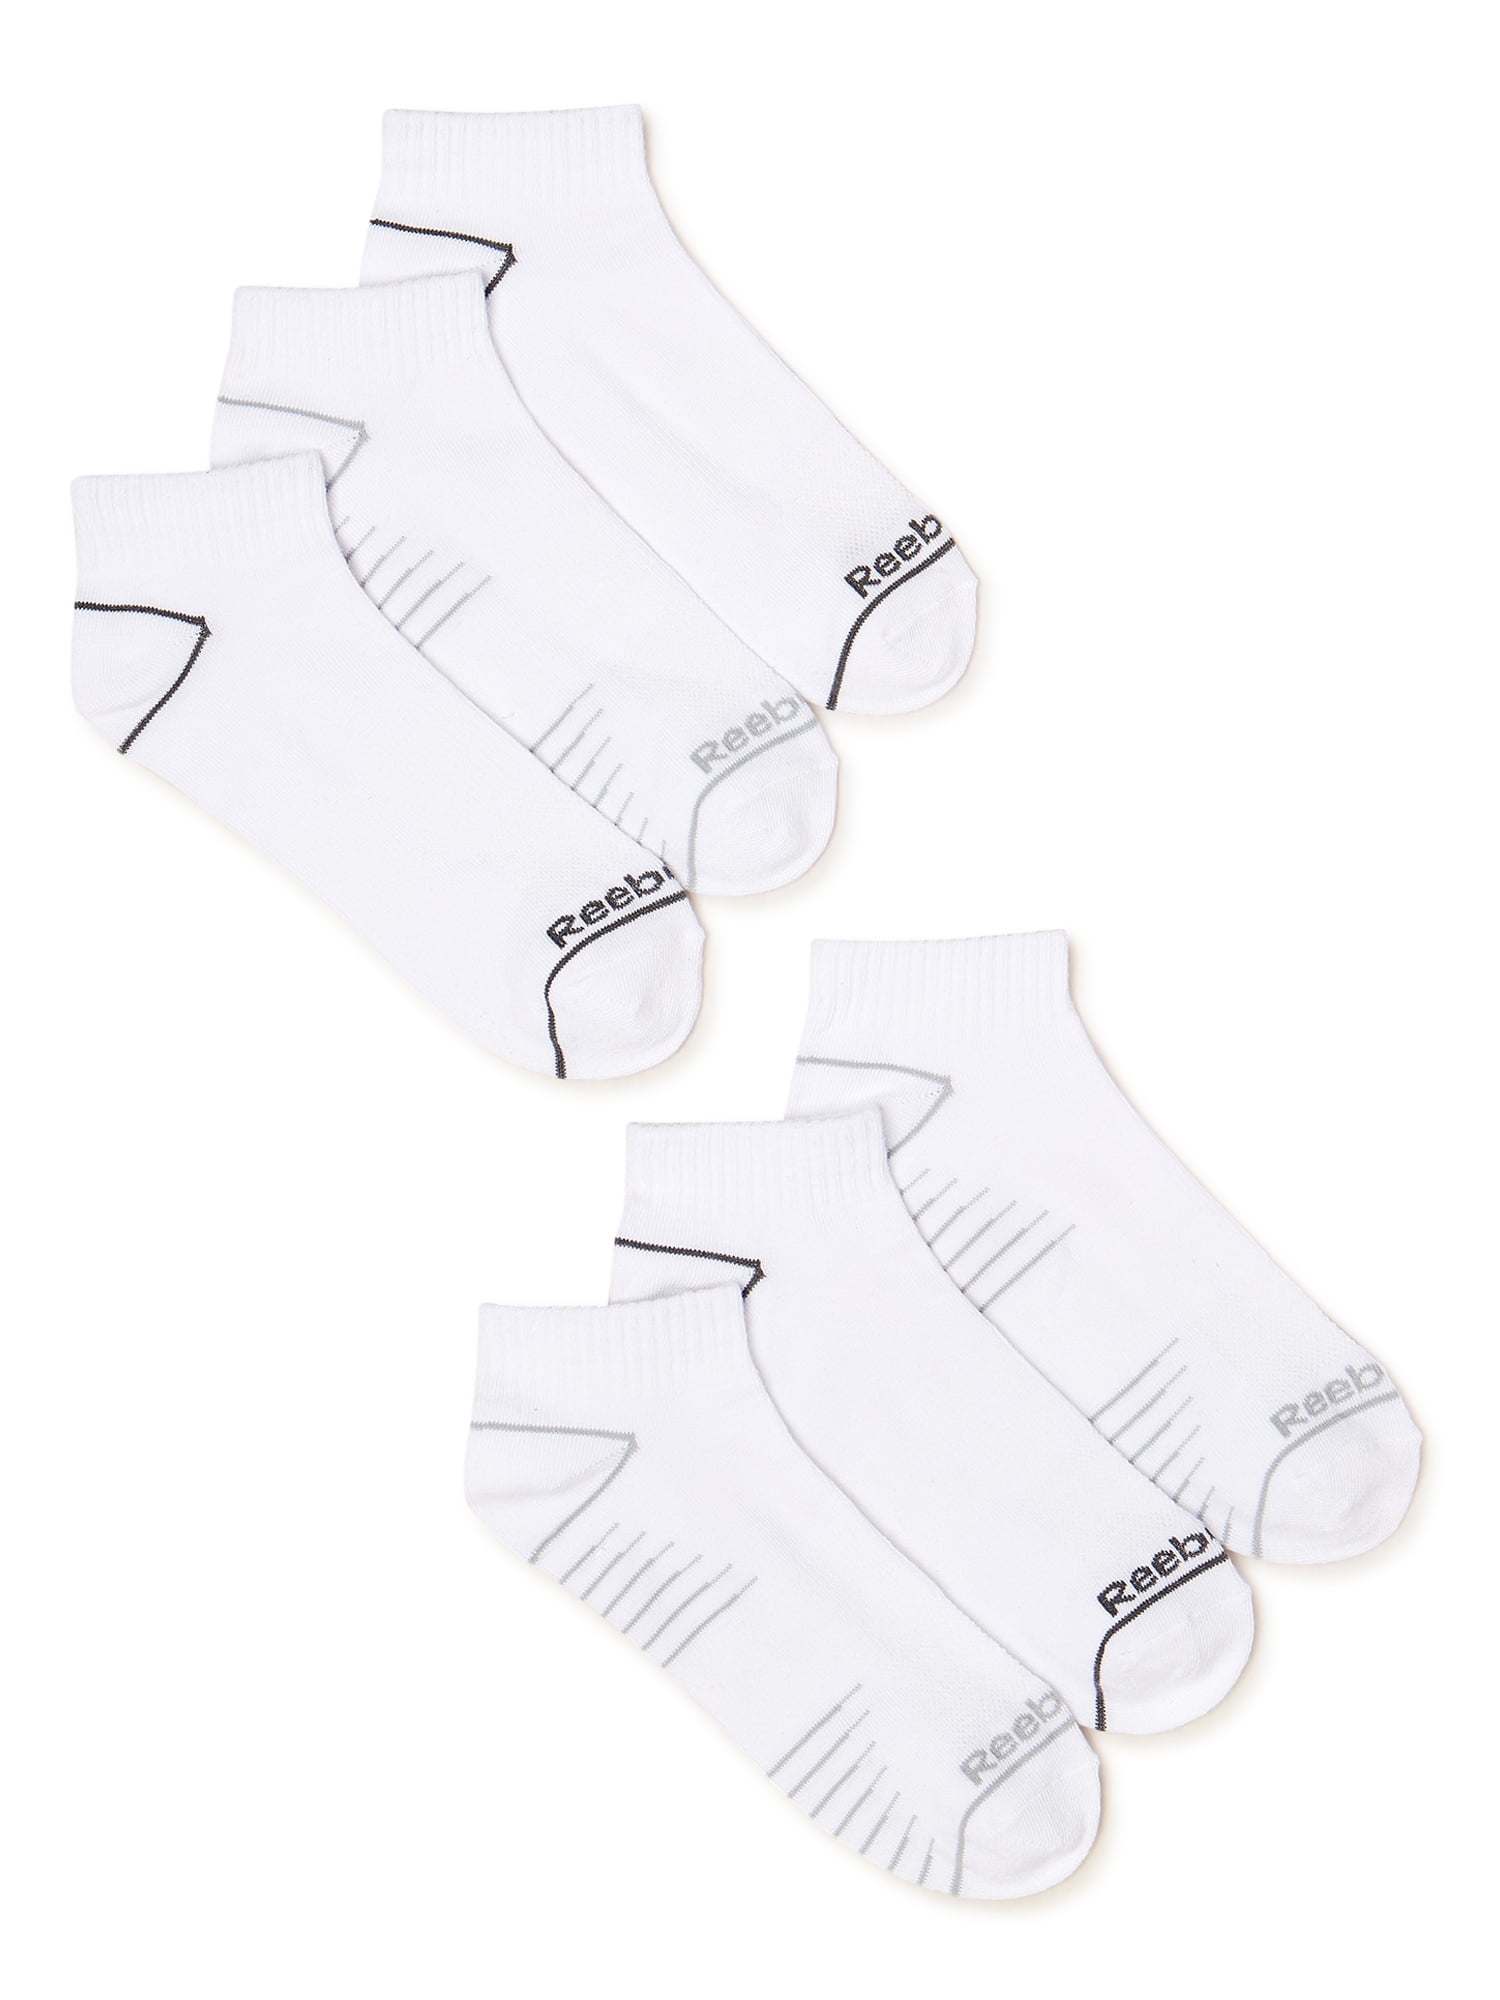 Reebok Men's Pro Series Flatknit Ankle Socks, 6-Pack - Walmart.com